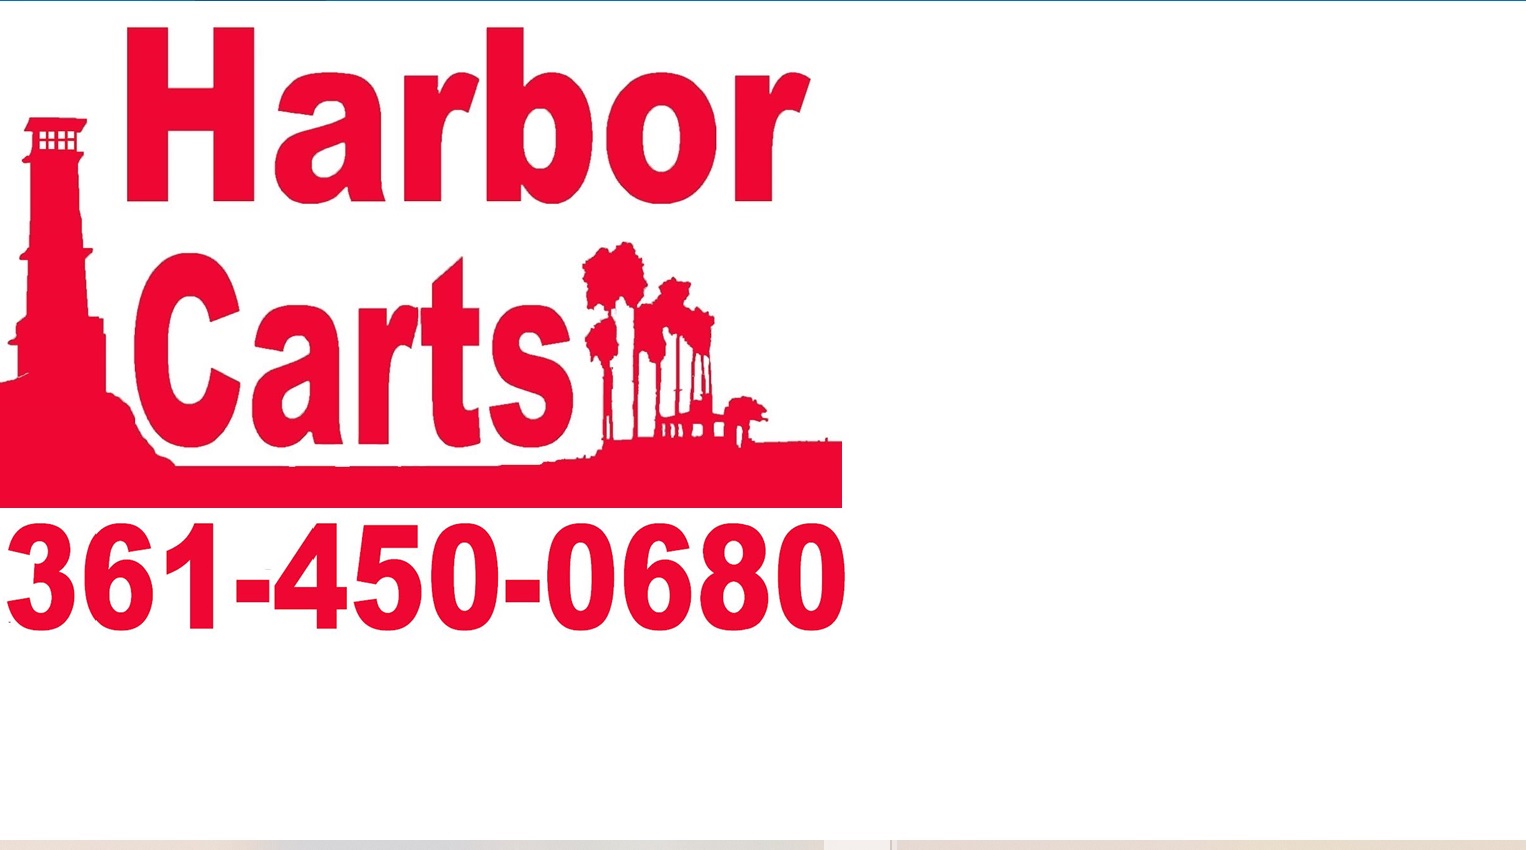 Harbor Carts